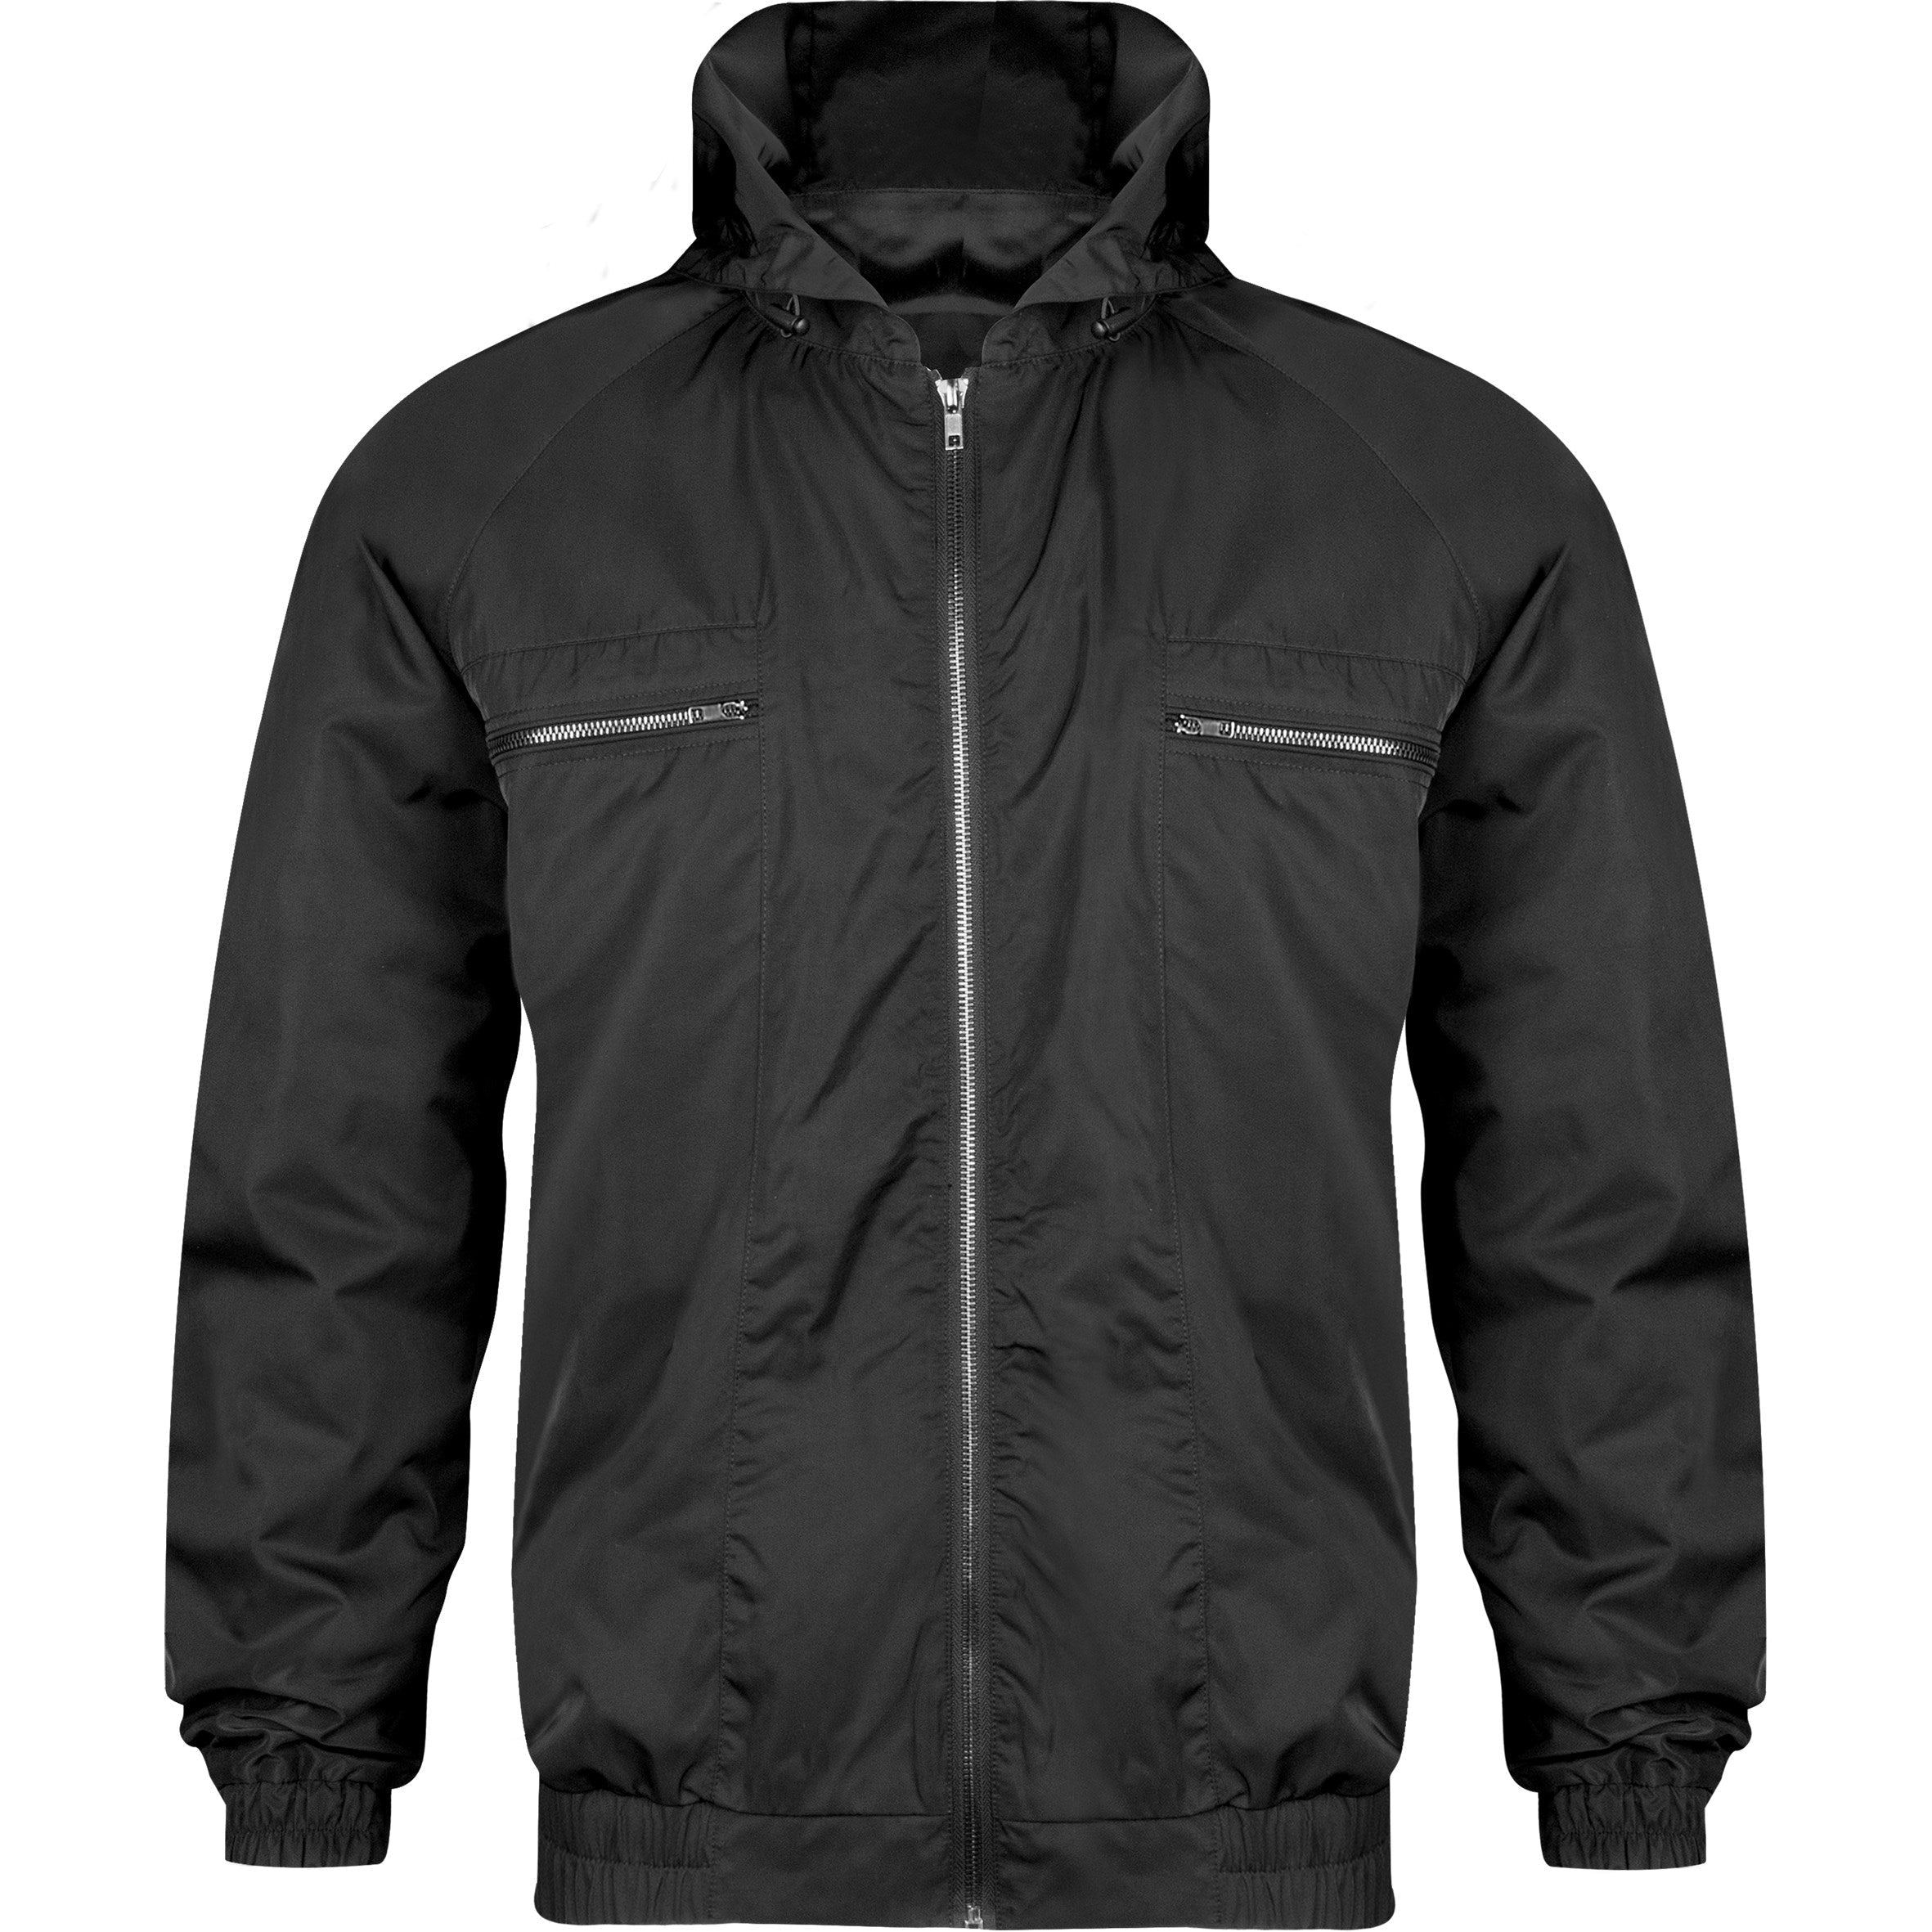 Mens Epic Jacket - Black Only-Coats & Jackets